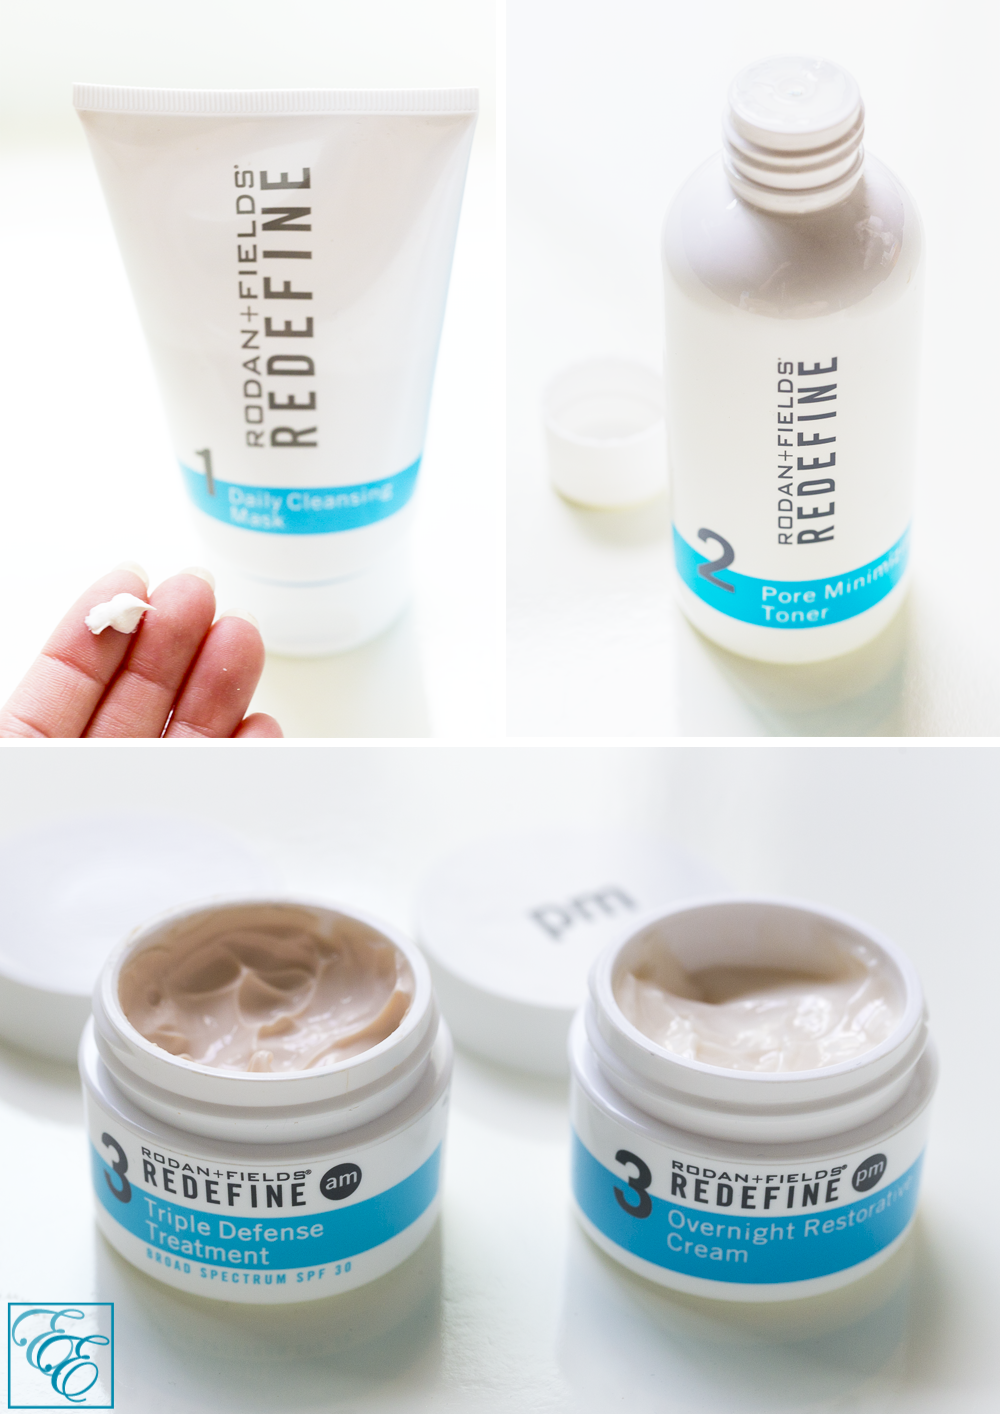 Rodan + Fields Redefine Skincare: Daily Cleansing Mask, Pore Minimizing Toner, Skin Cream